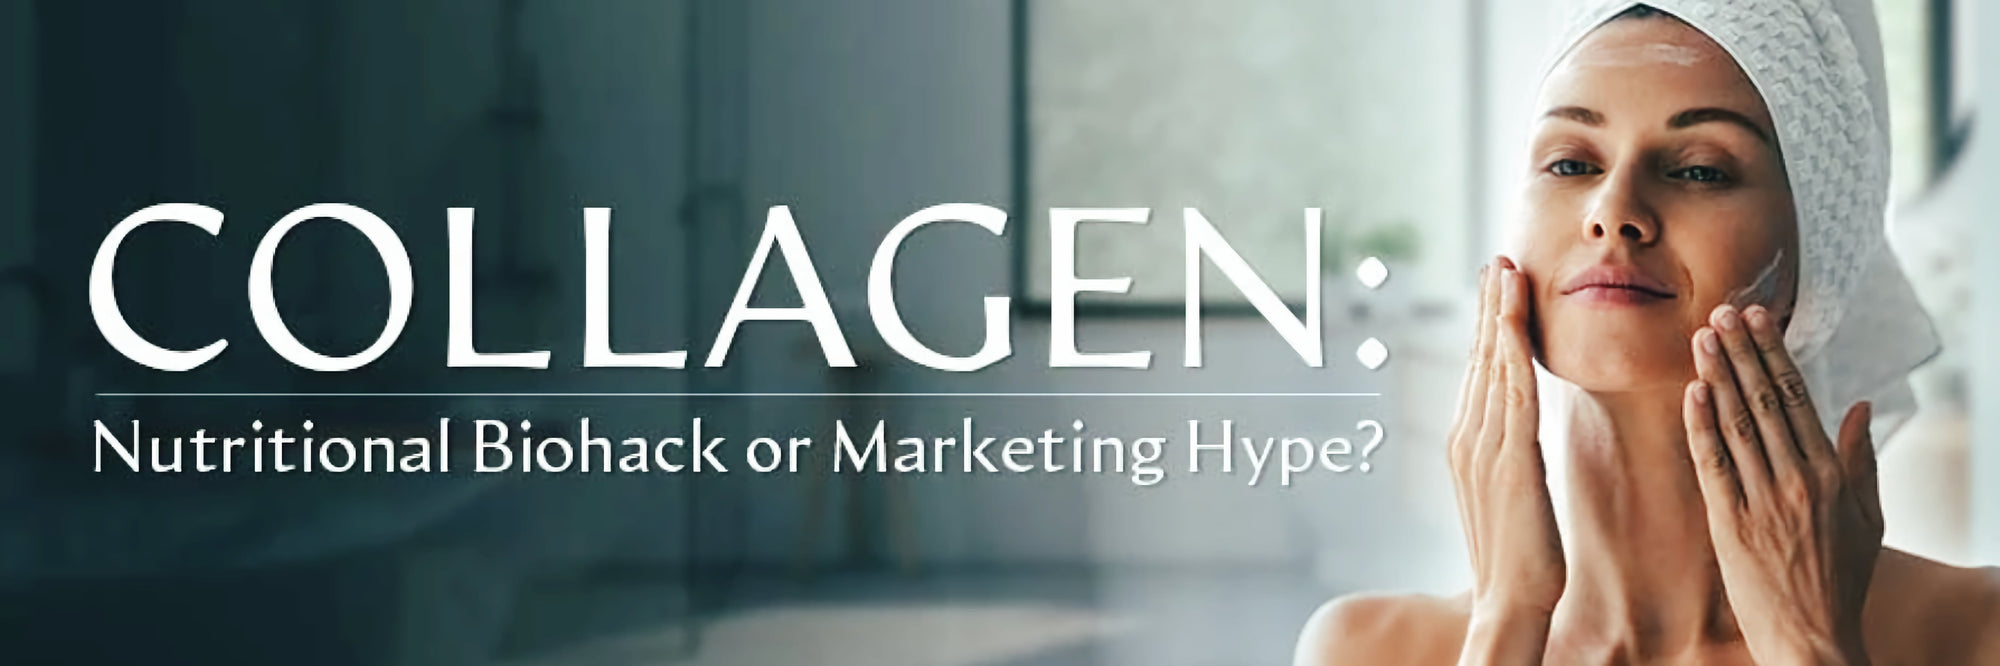 Collagen: Biohack or Marketing Hype?